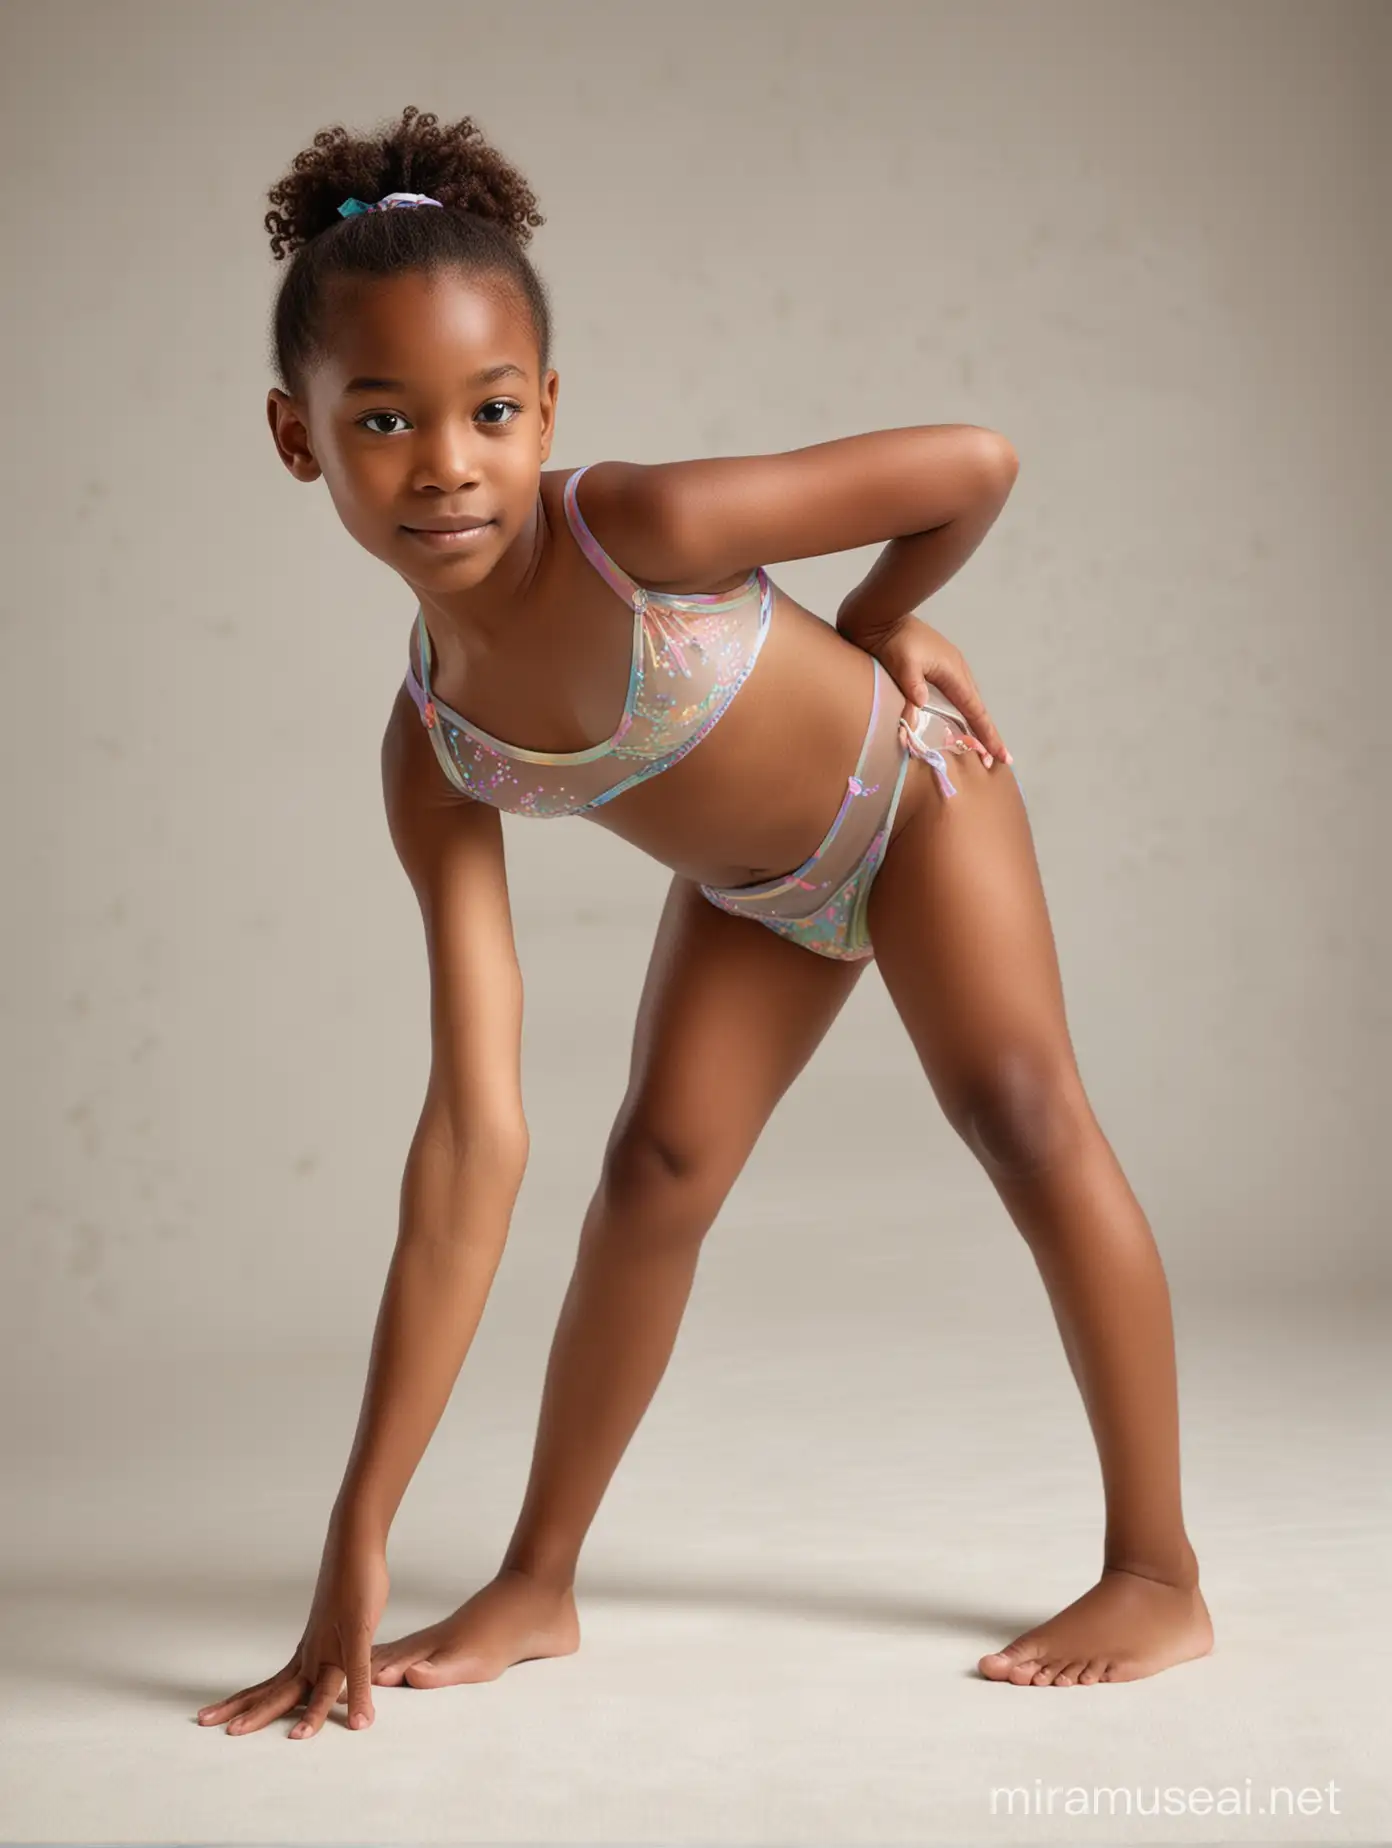 African American, 10-year-old girl, in 2 piece sheer bikini, downward facing dog pose